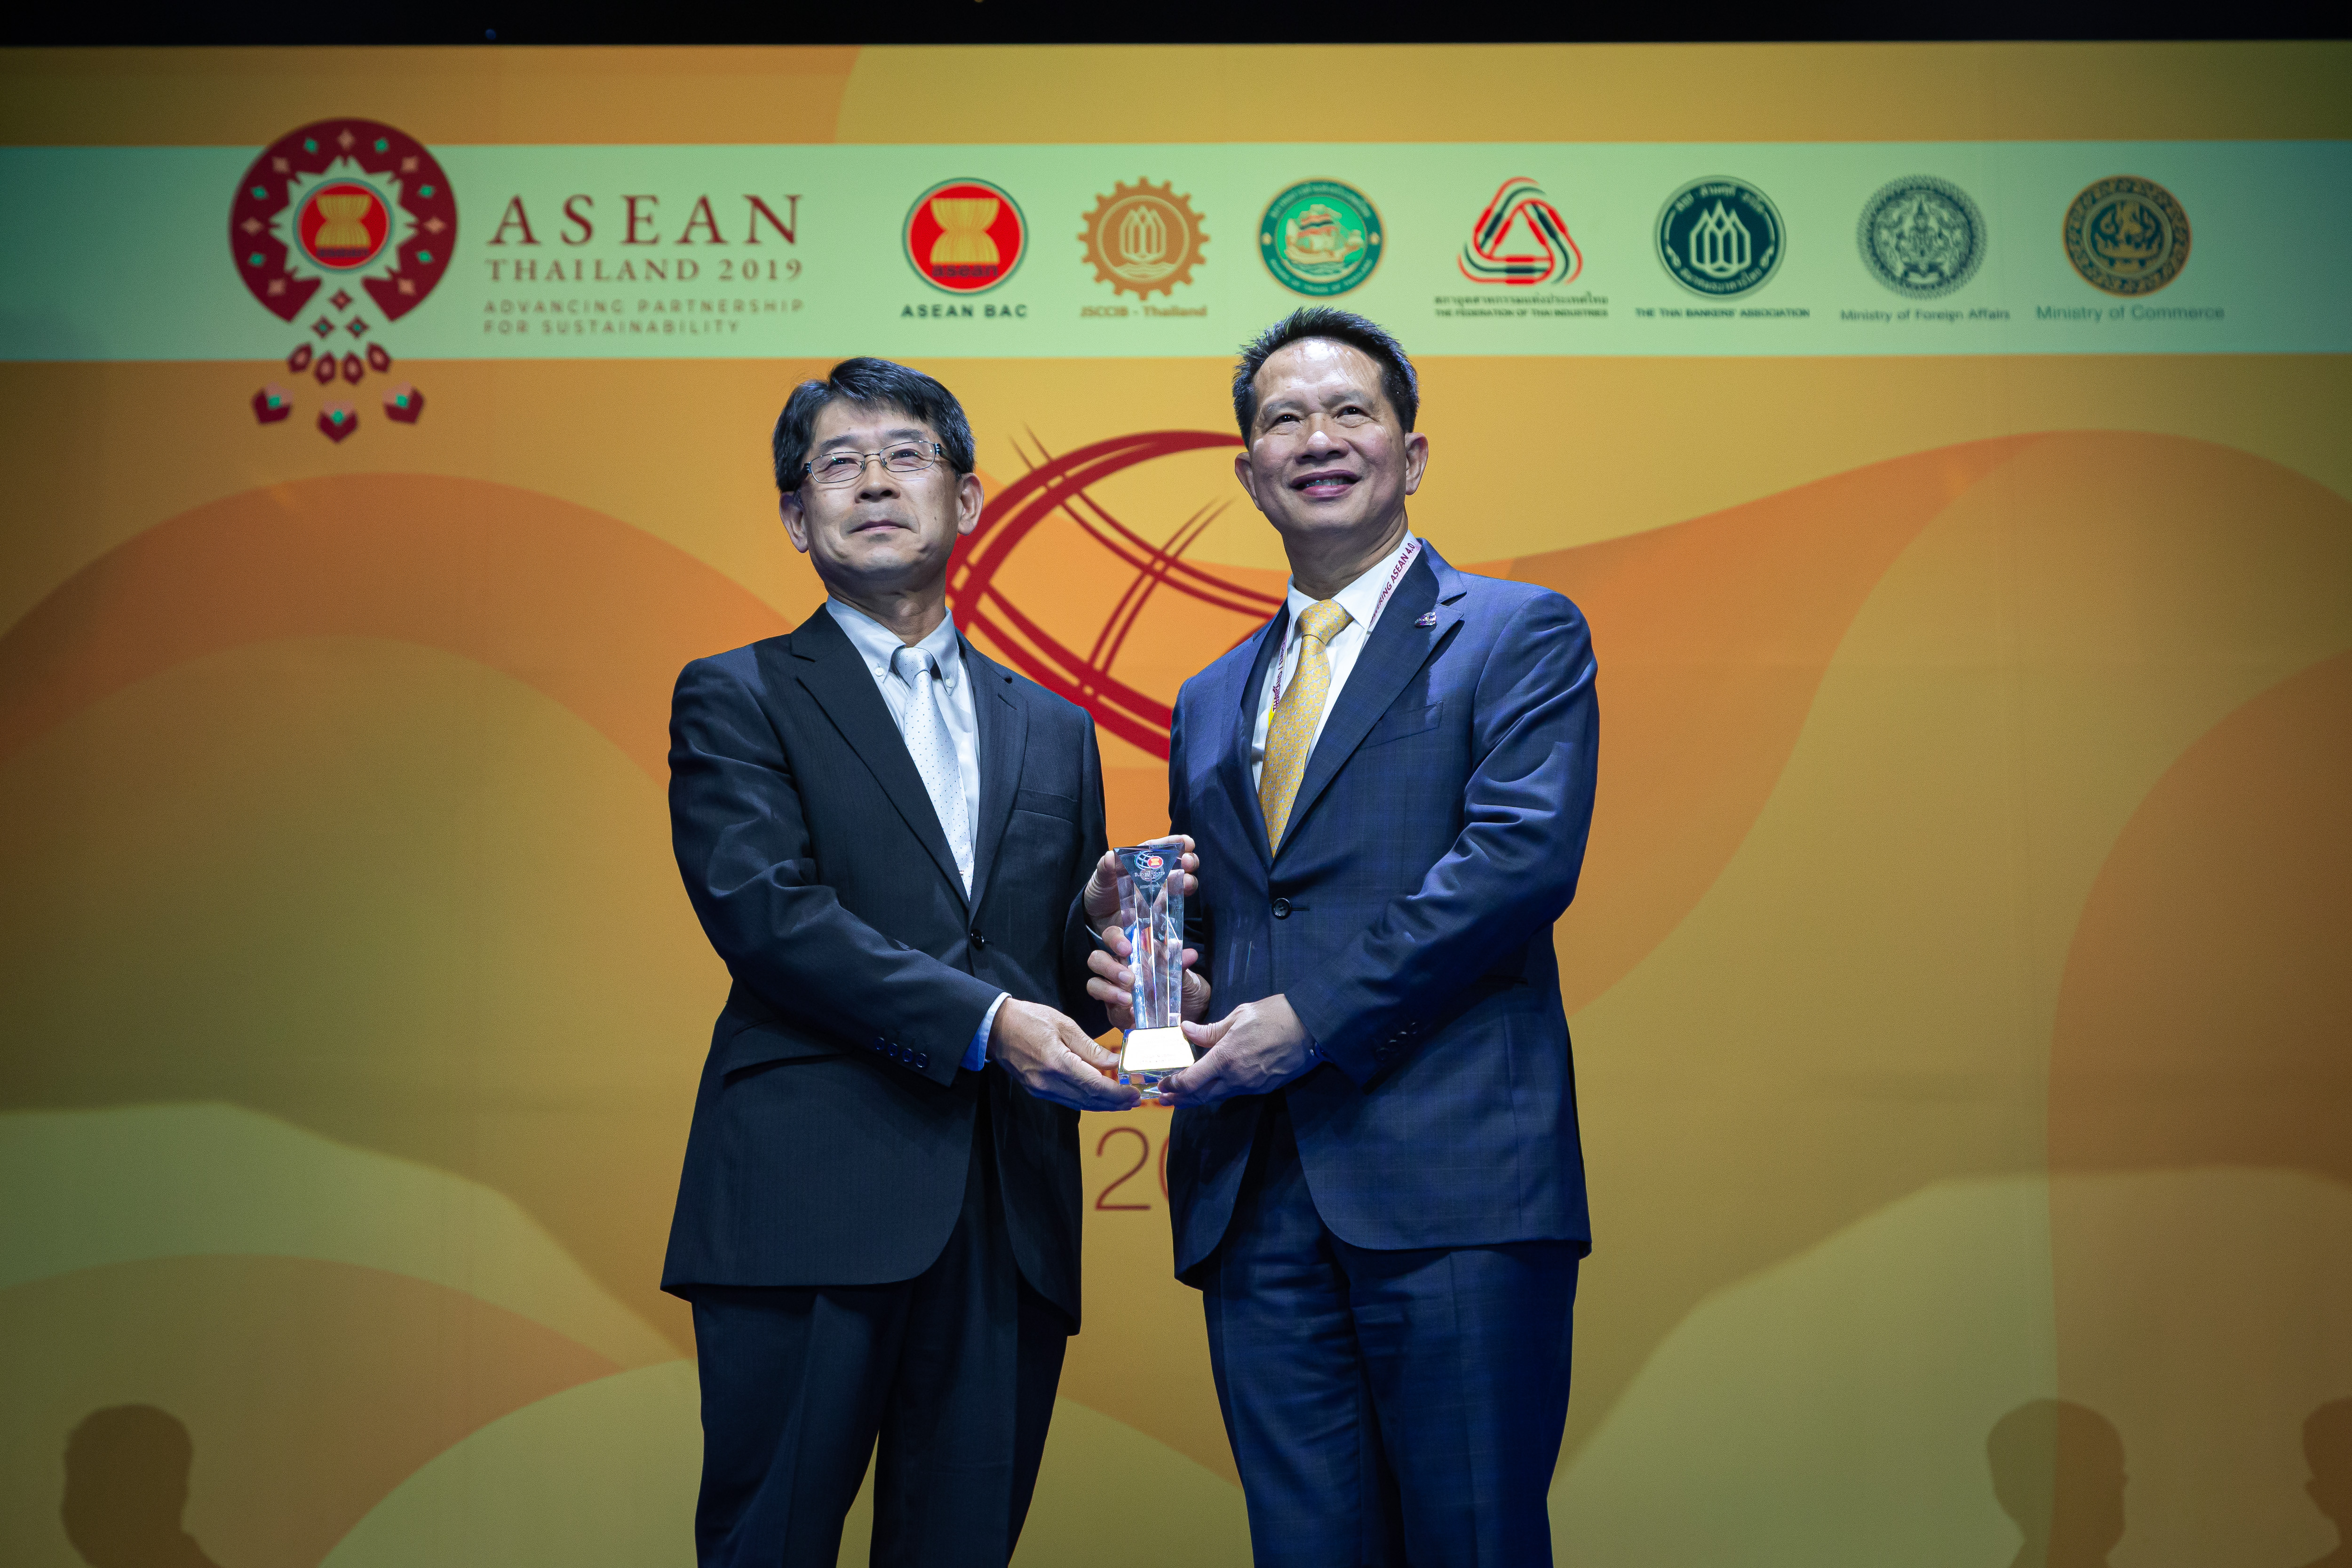 IRC received ASEAN BUSINESS AWARDS 2019